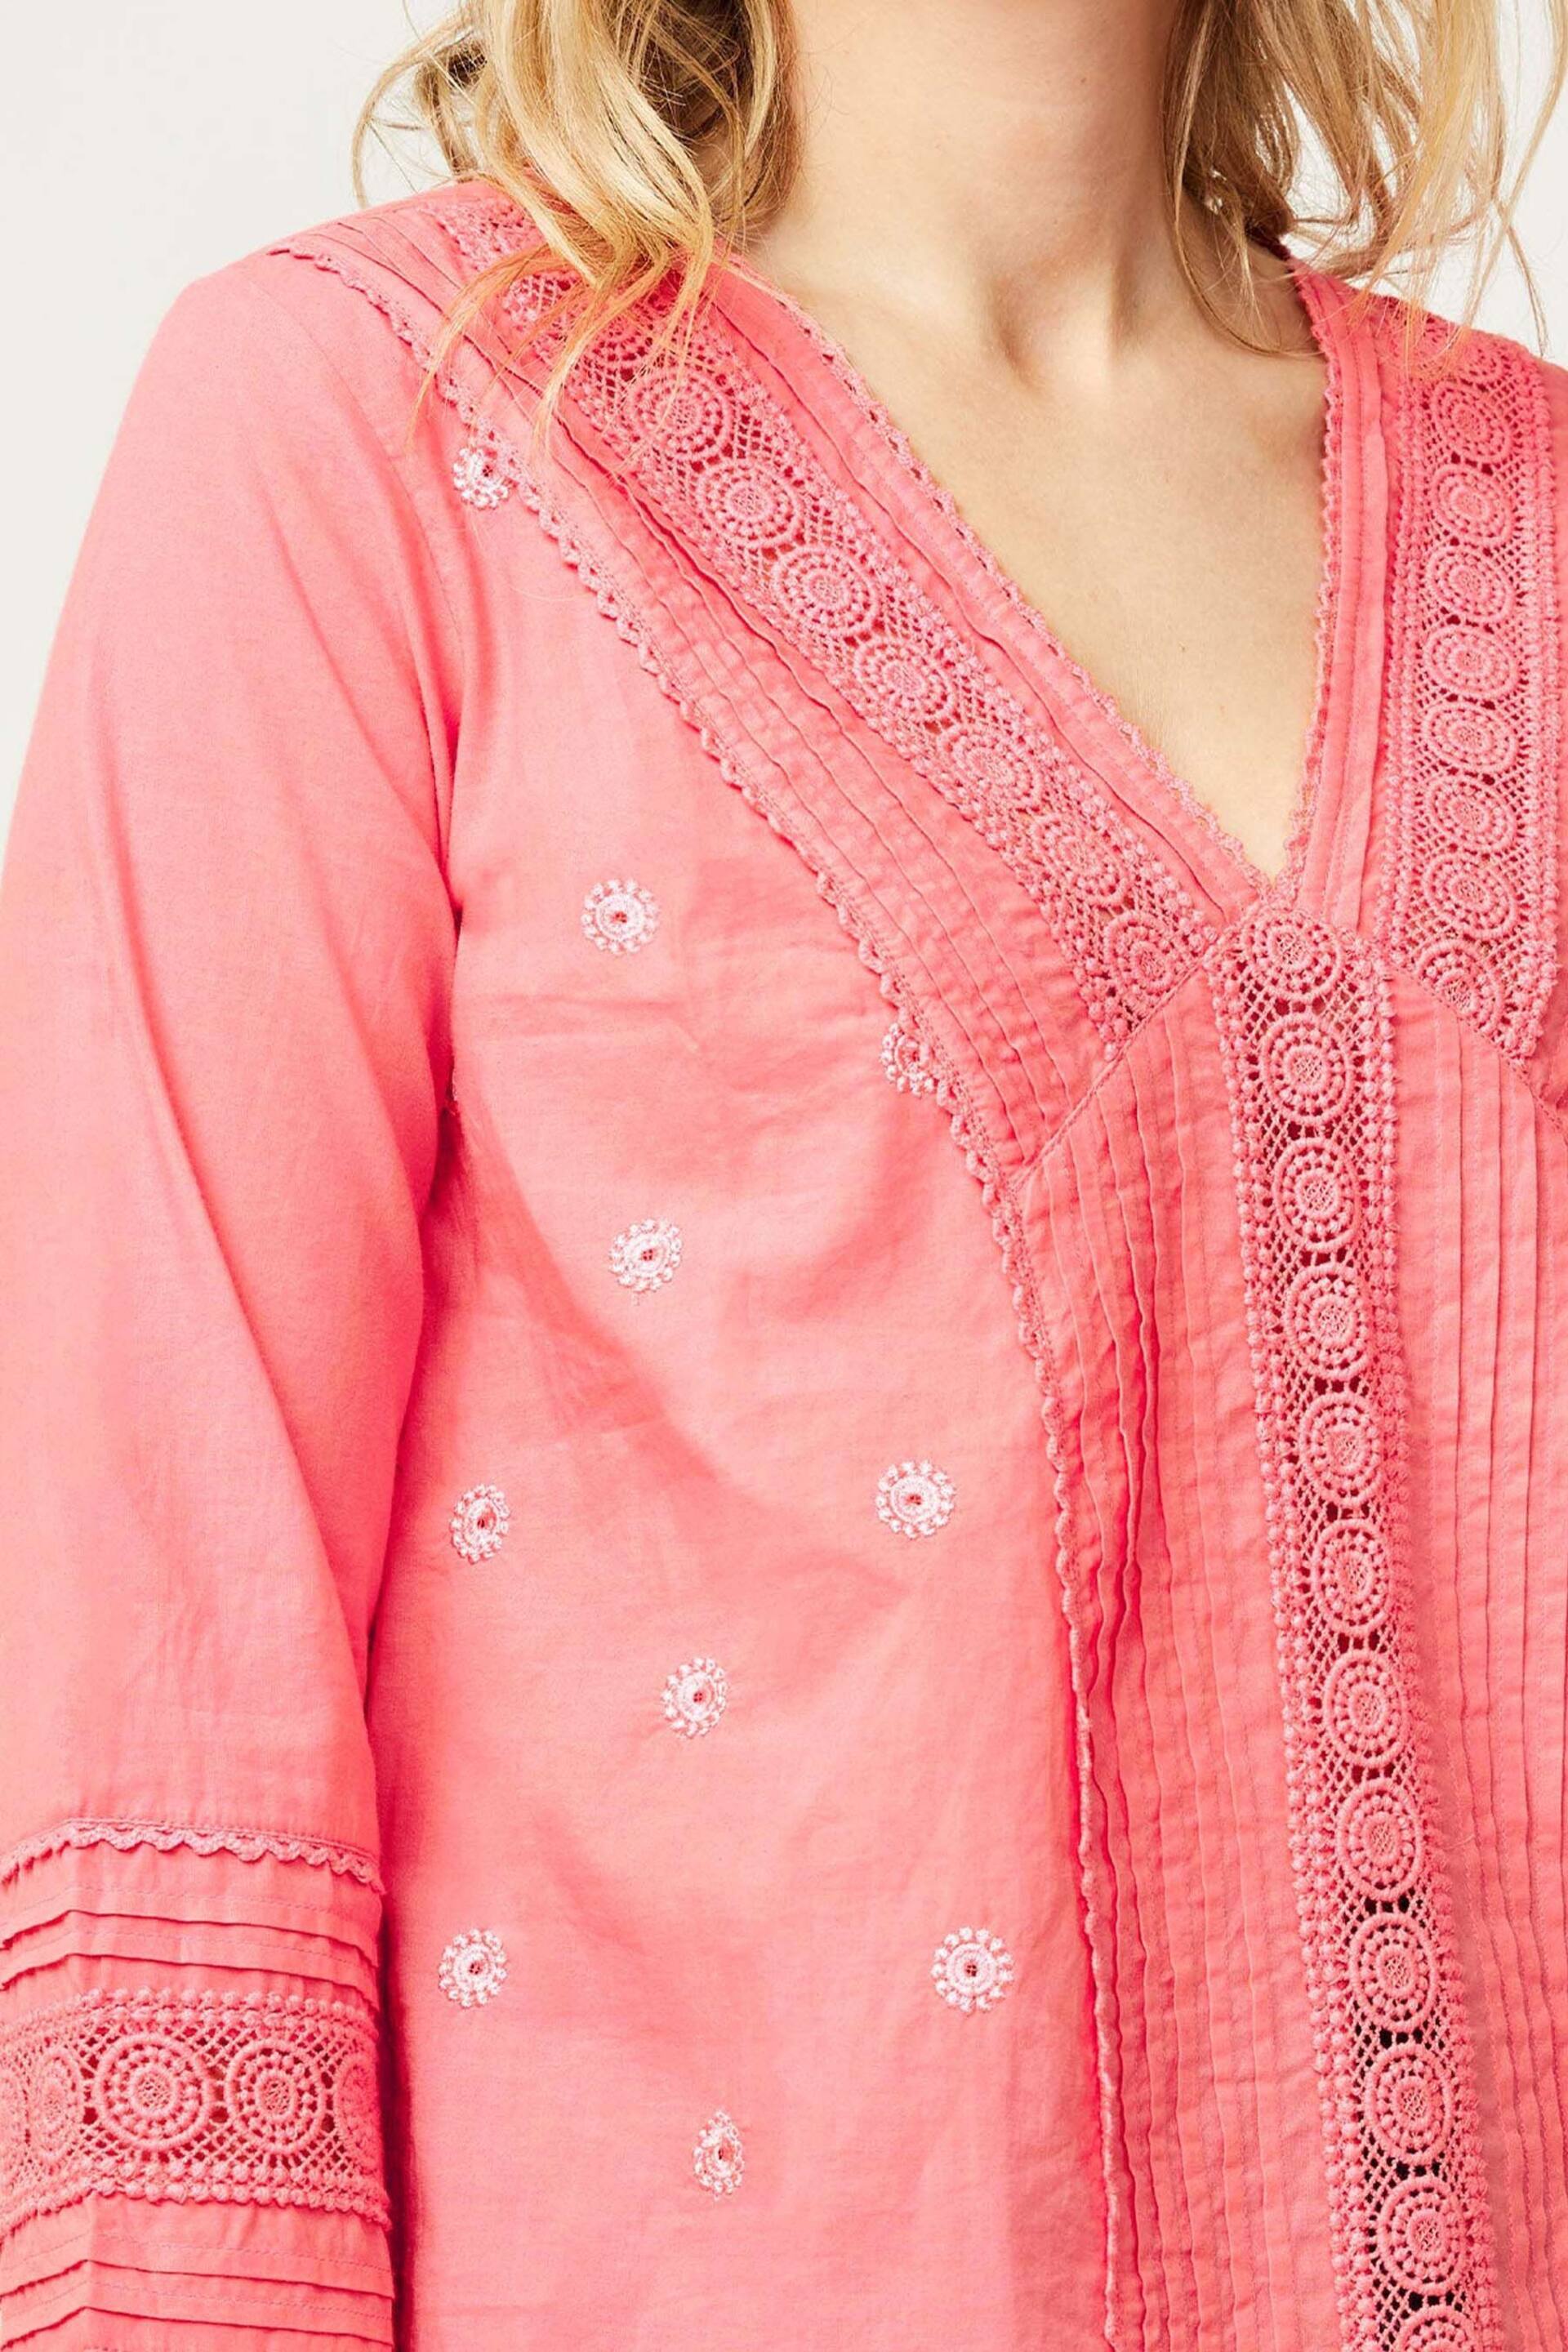 Aspiga Valentina Pink Embroidered Organic Cotton Blouse - Image 4 of 5